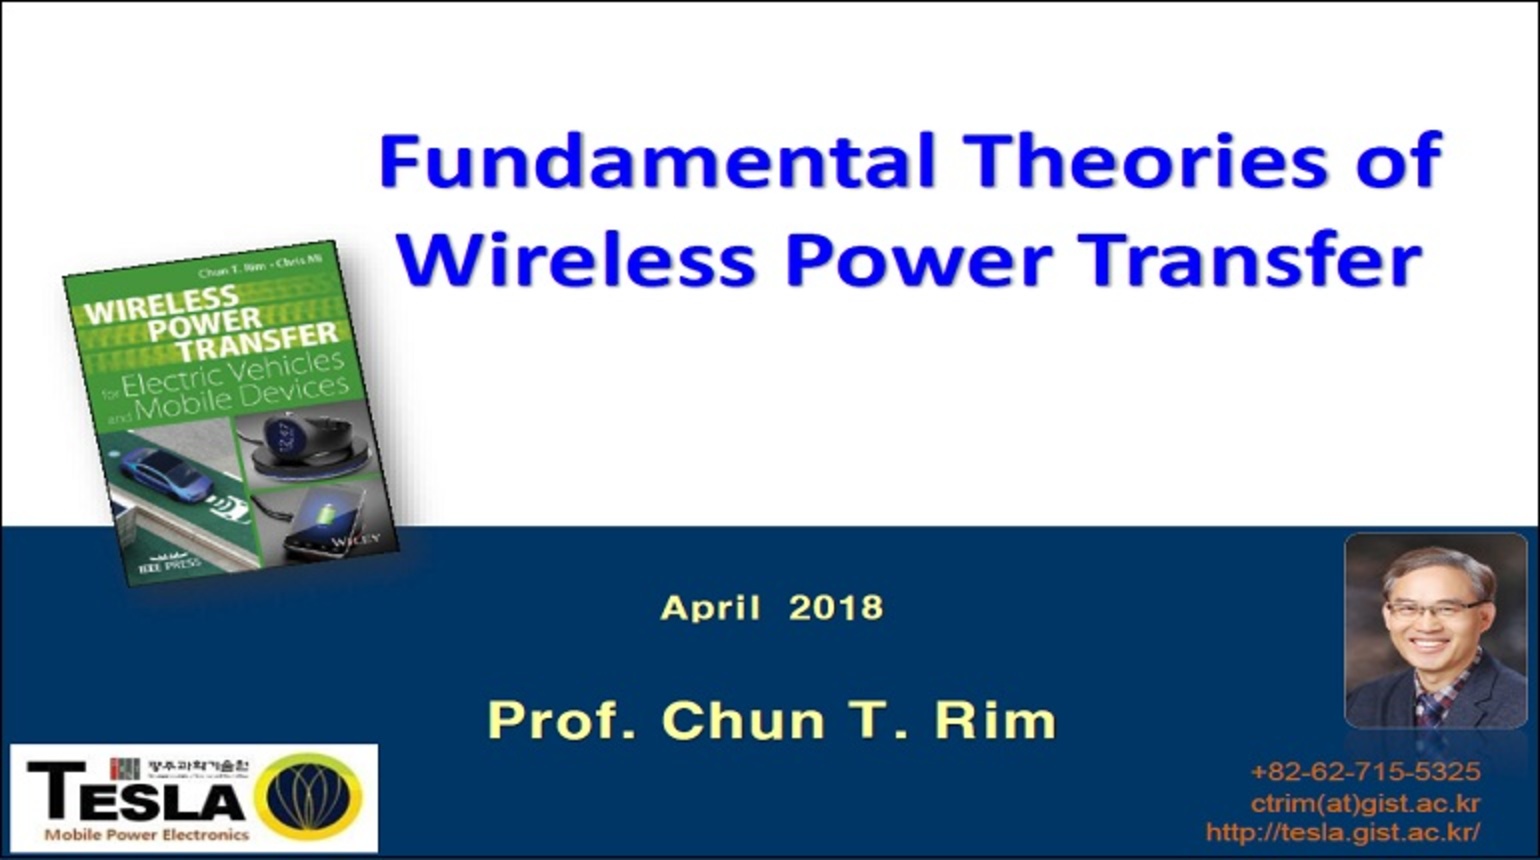 Fundamental Theories of Wireless Power Transfer Video